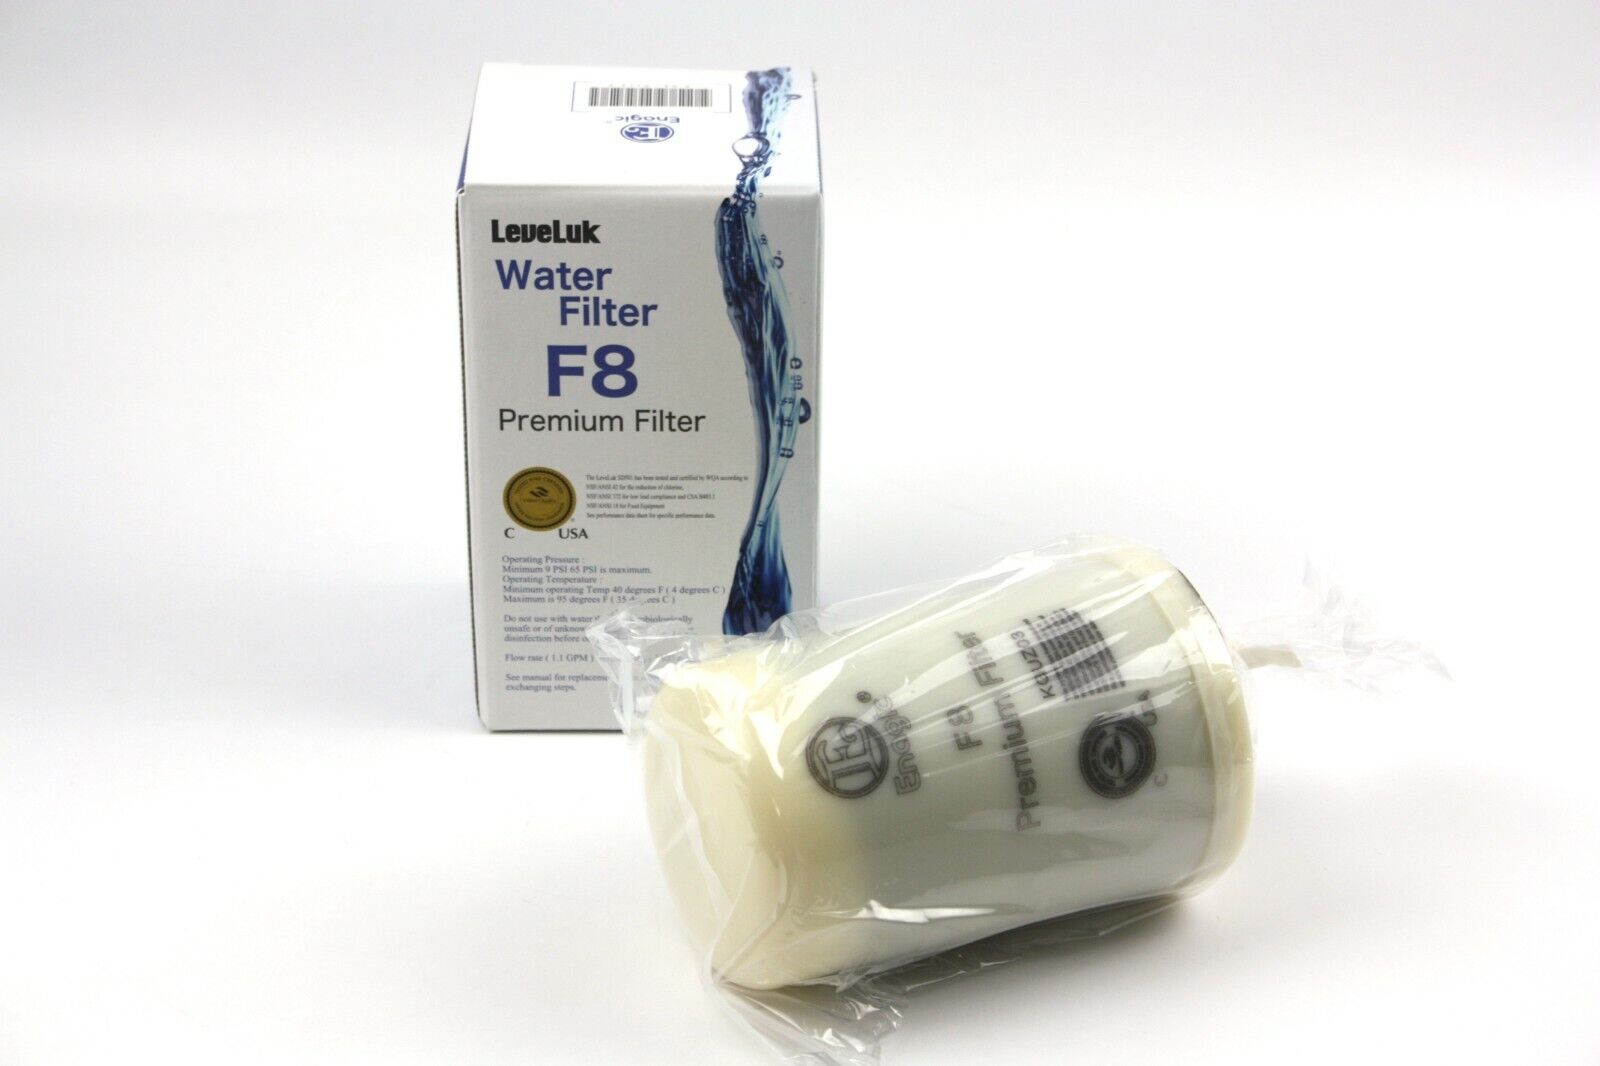 Leveluk F8 Filter for Kangen K8 water Ioniser machine made by Enagic